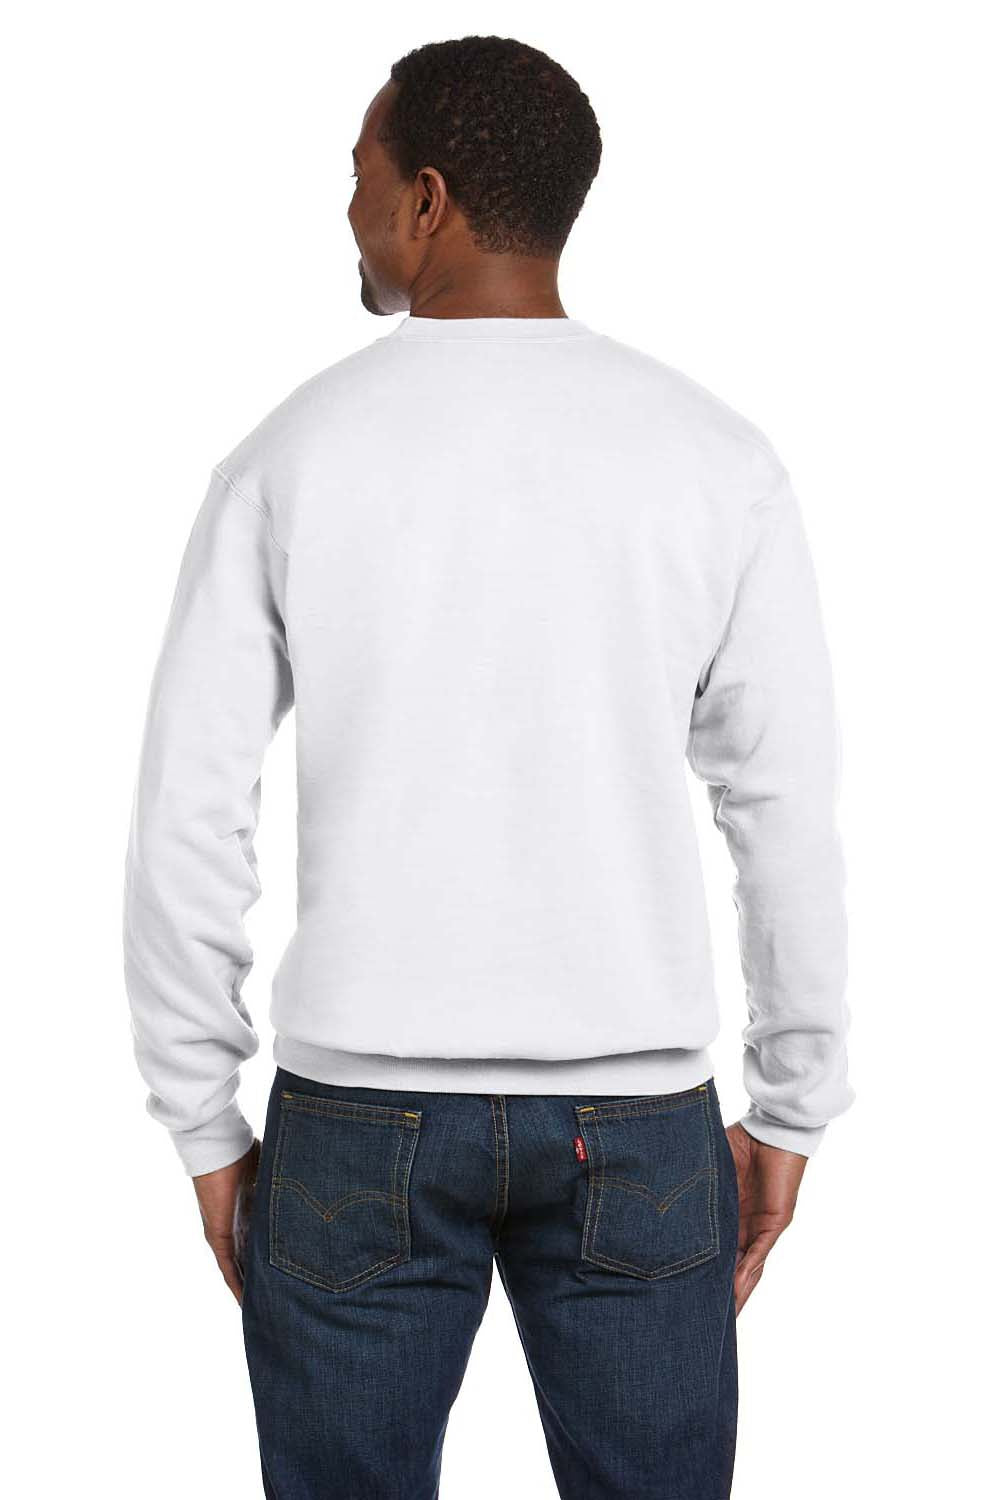 Hanes P160 Mens EcoSmart Print Pro XP Fleece Crewneck Sweatshirt White Back